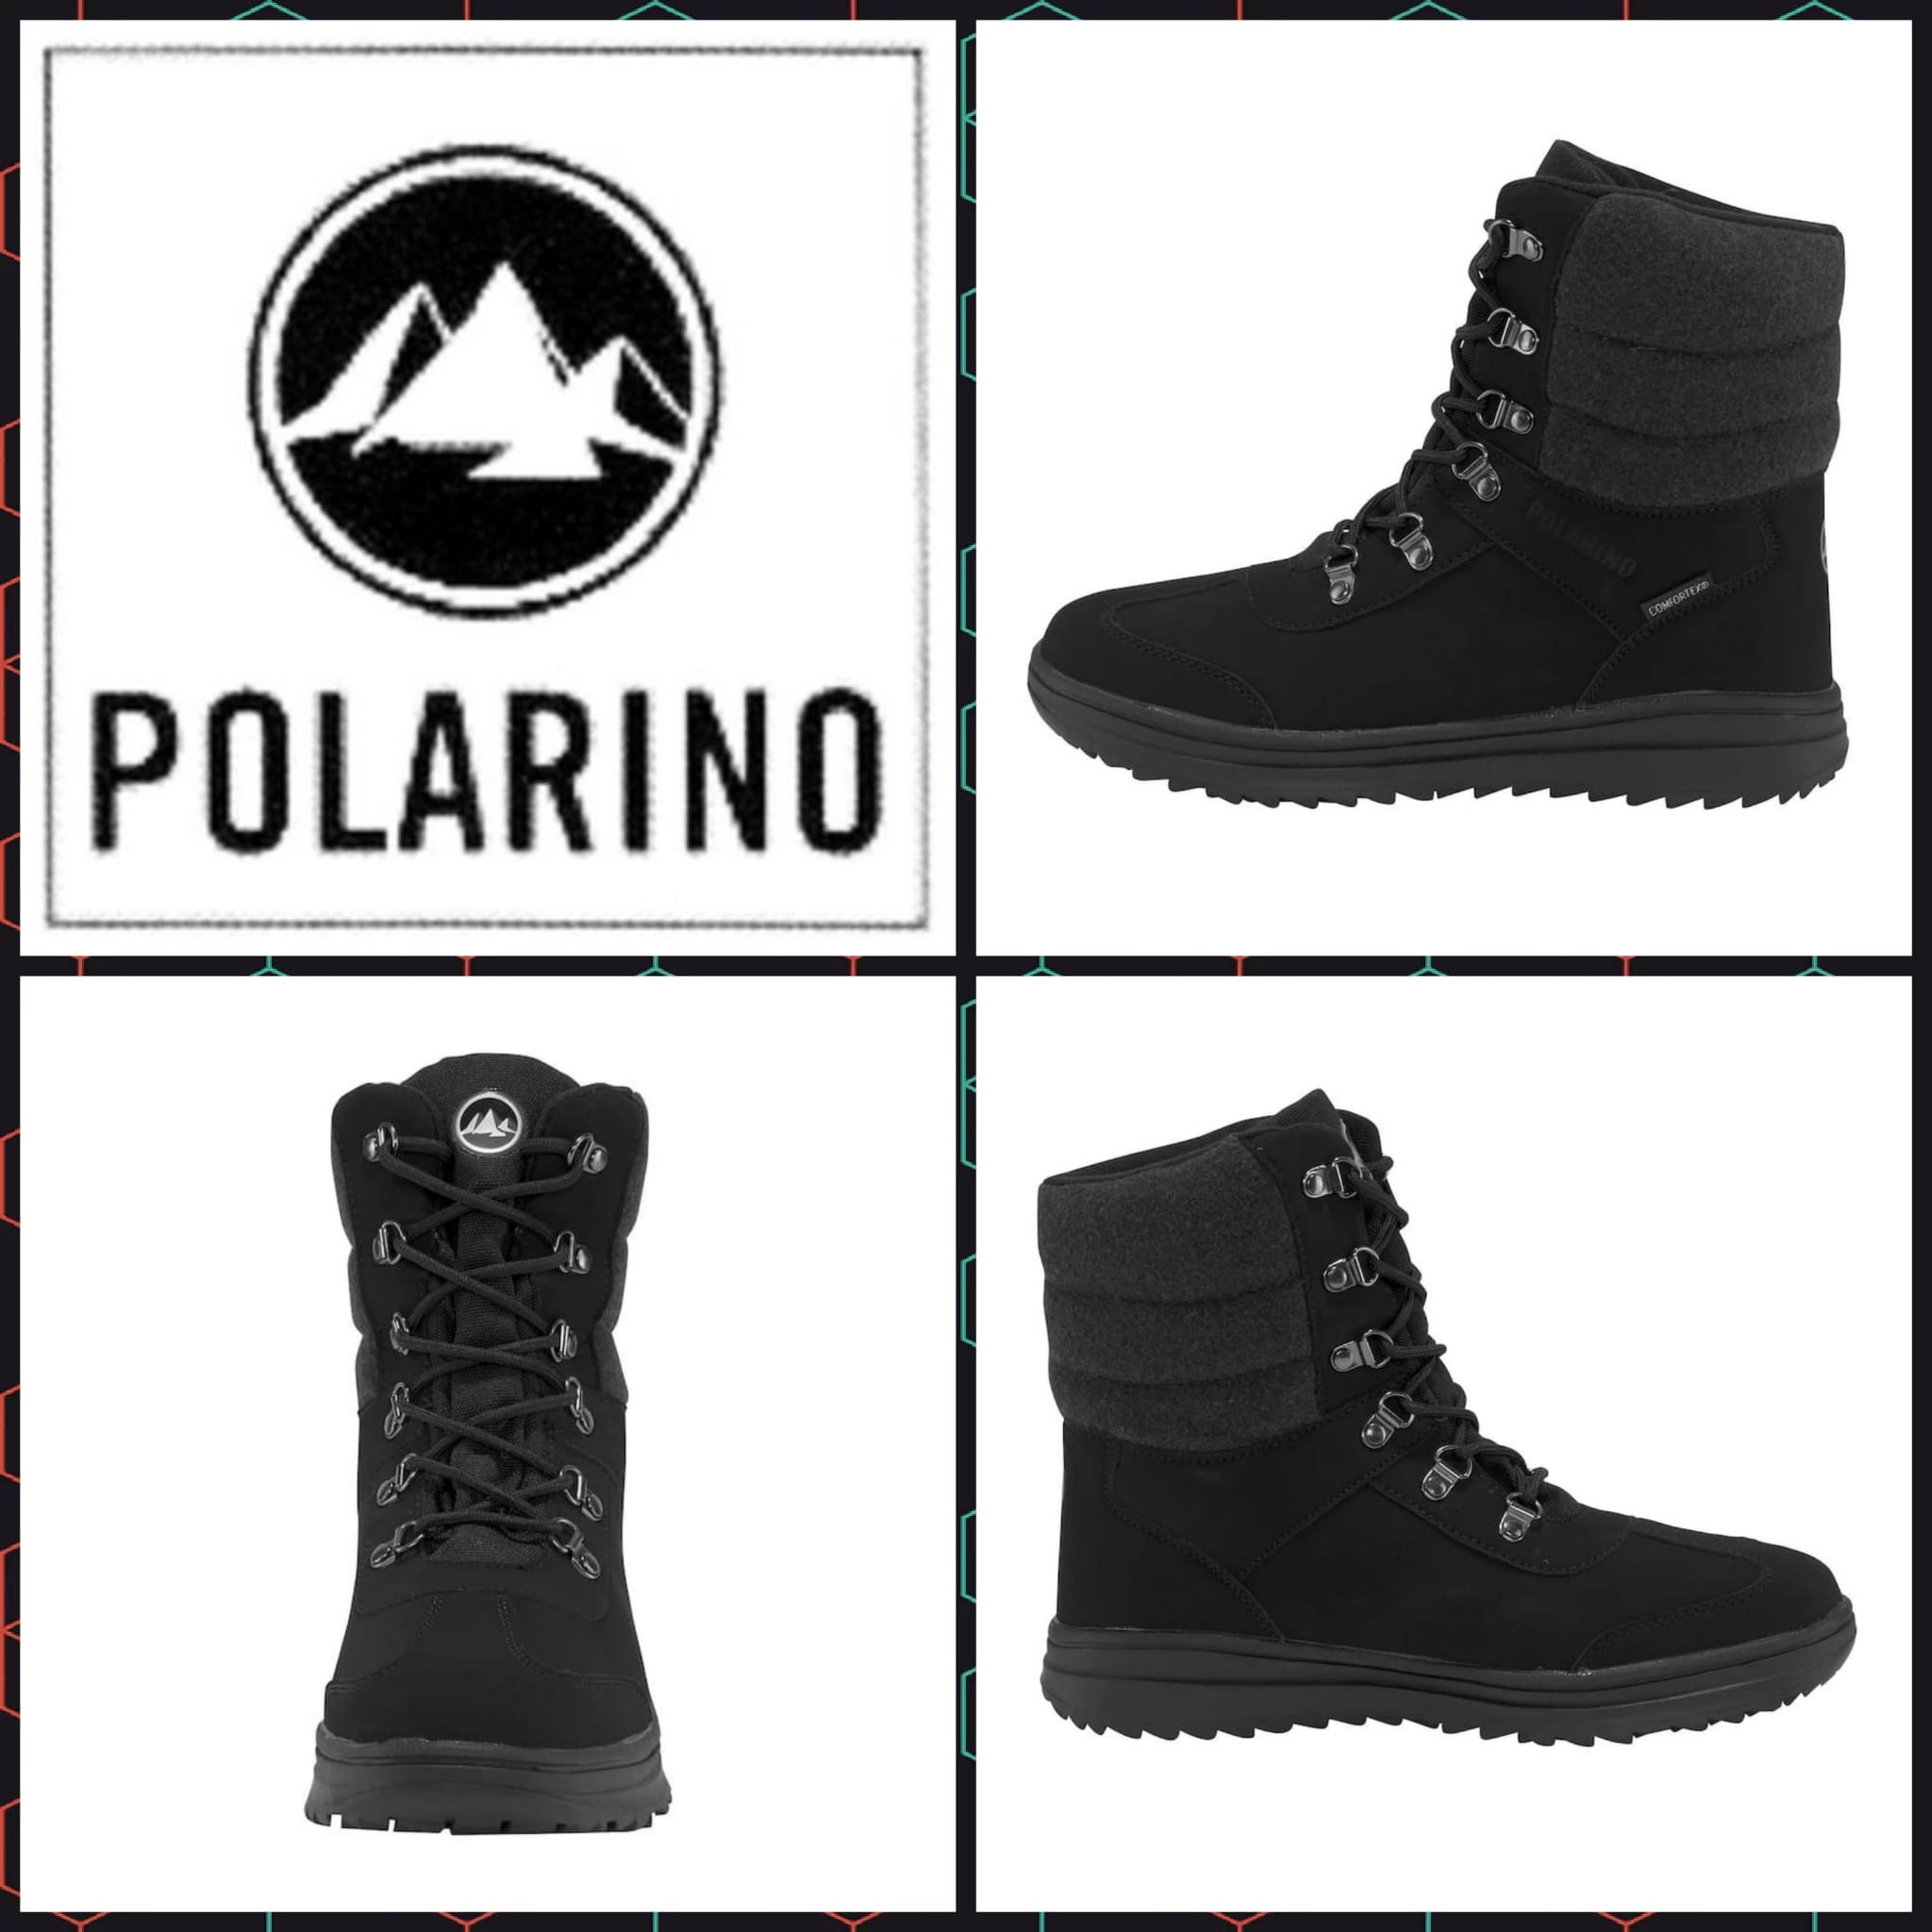 Polarino winter boots for women